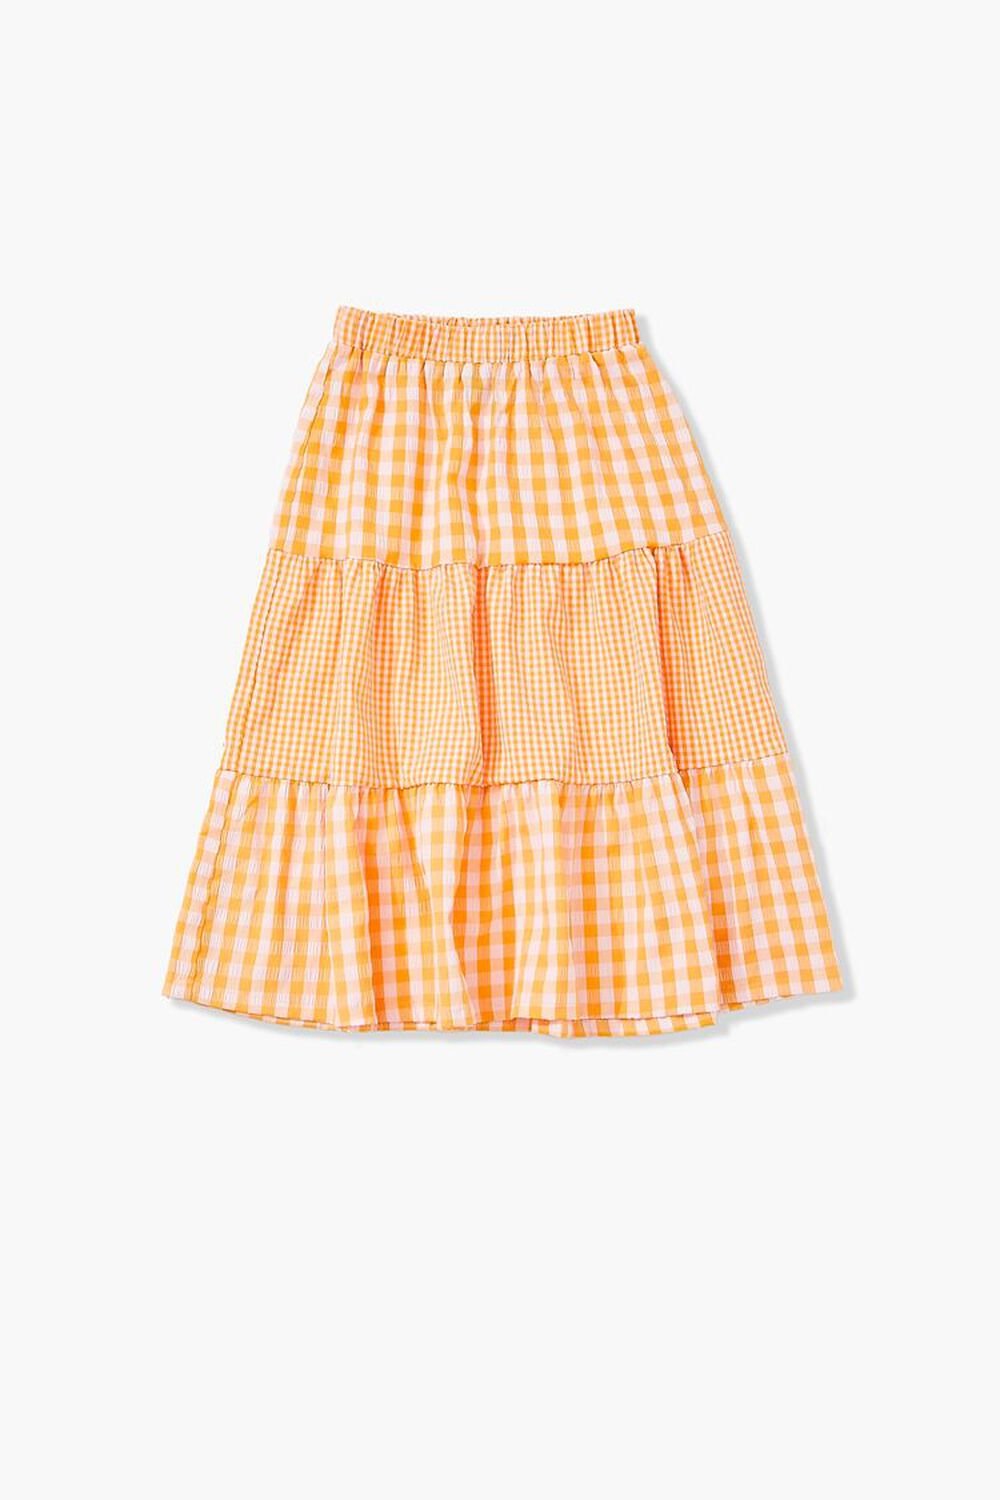 ORANGE/WHITE Girls Gingham Maxi Skirt (Kids), image 1